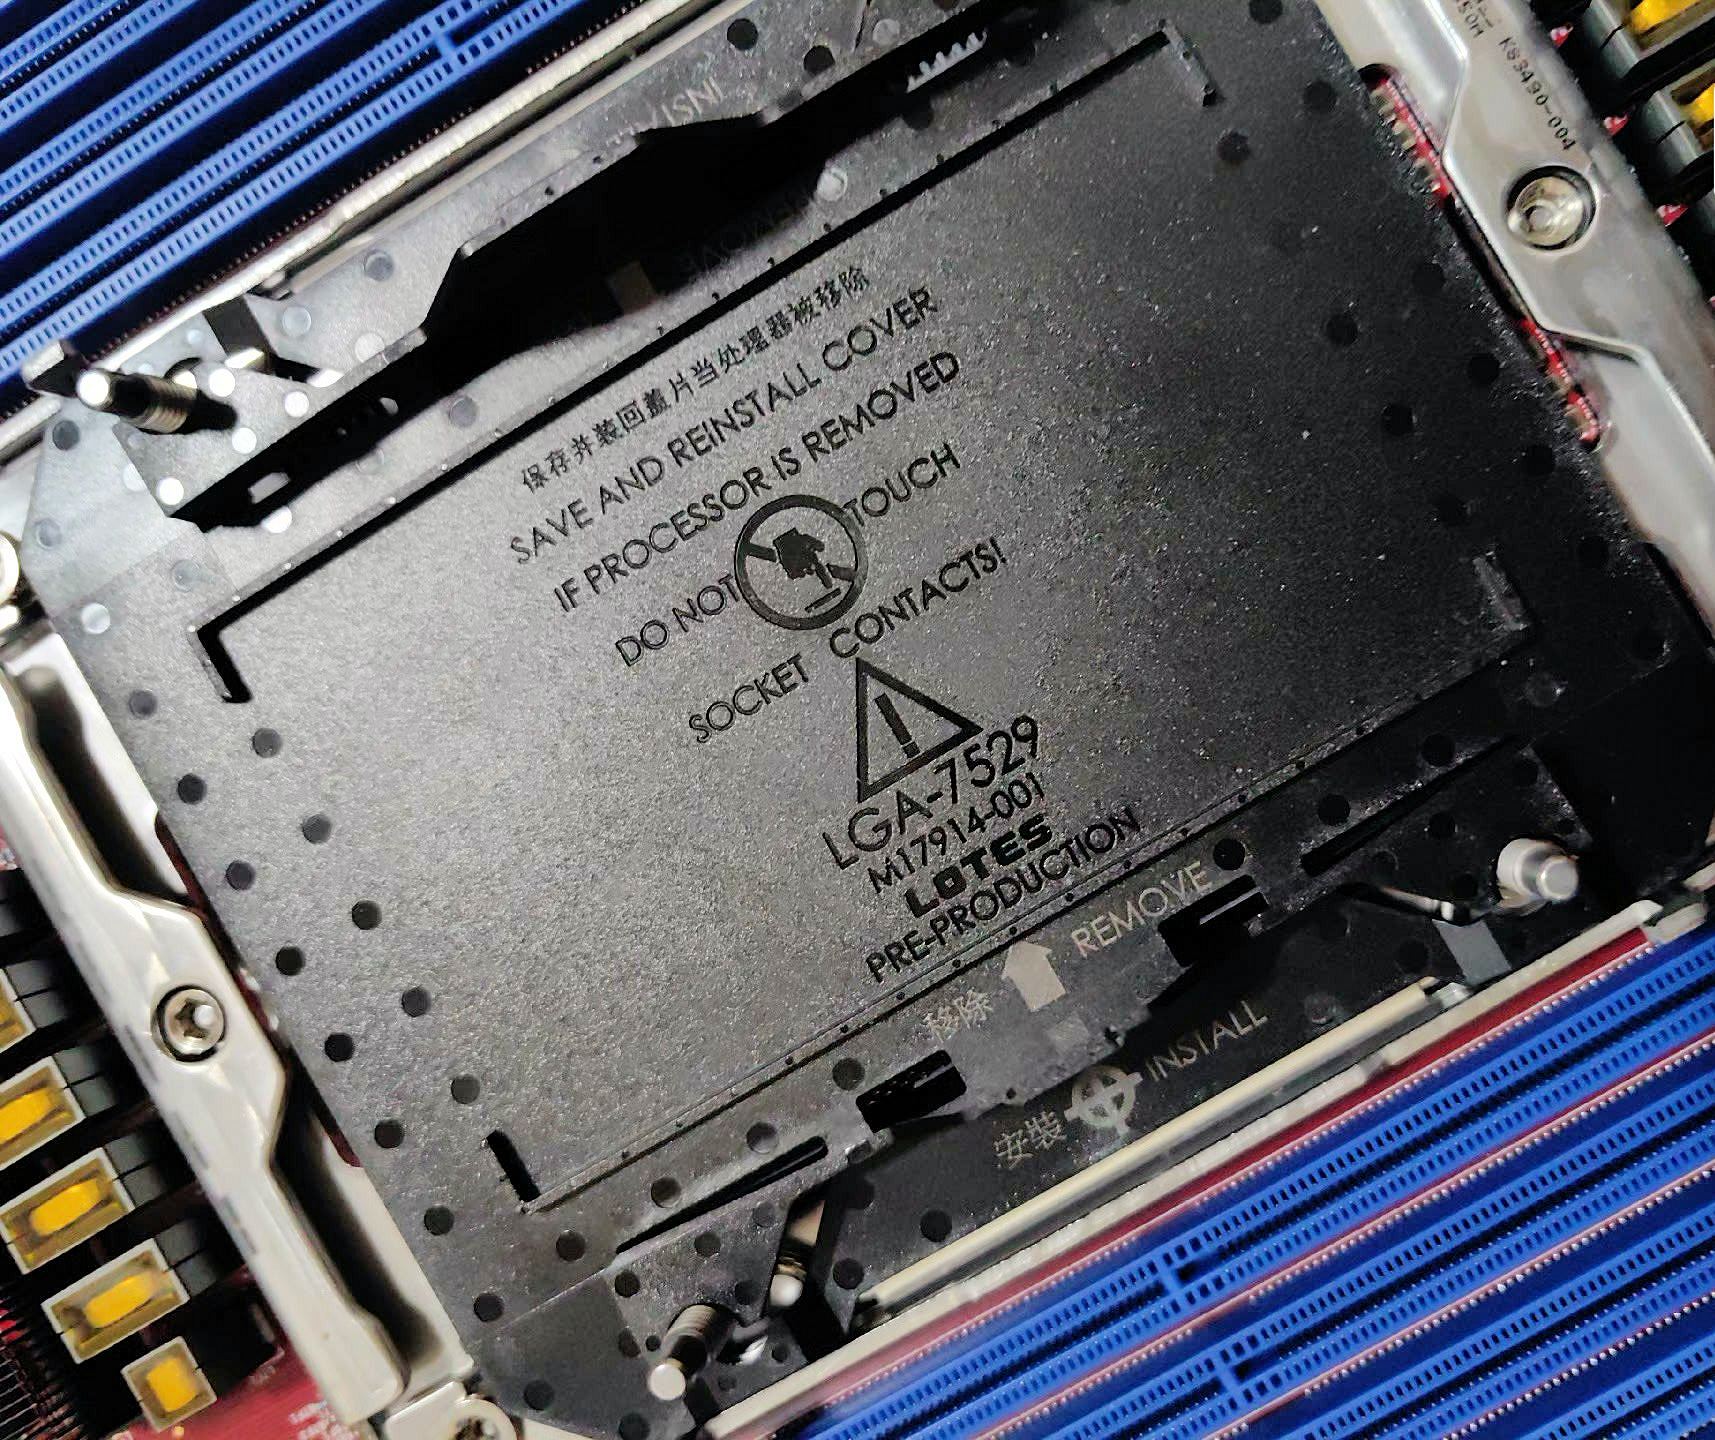 Intel Xeon "Sierra Forest" Uses A Huge LGA-7529 Socket